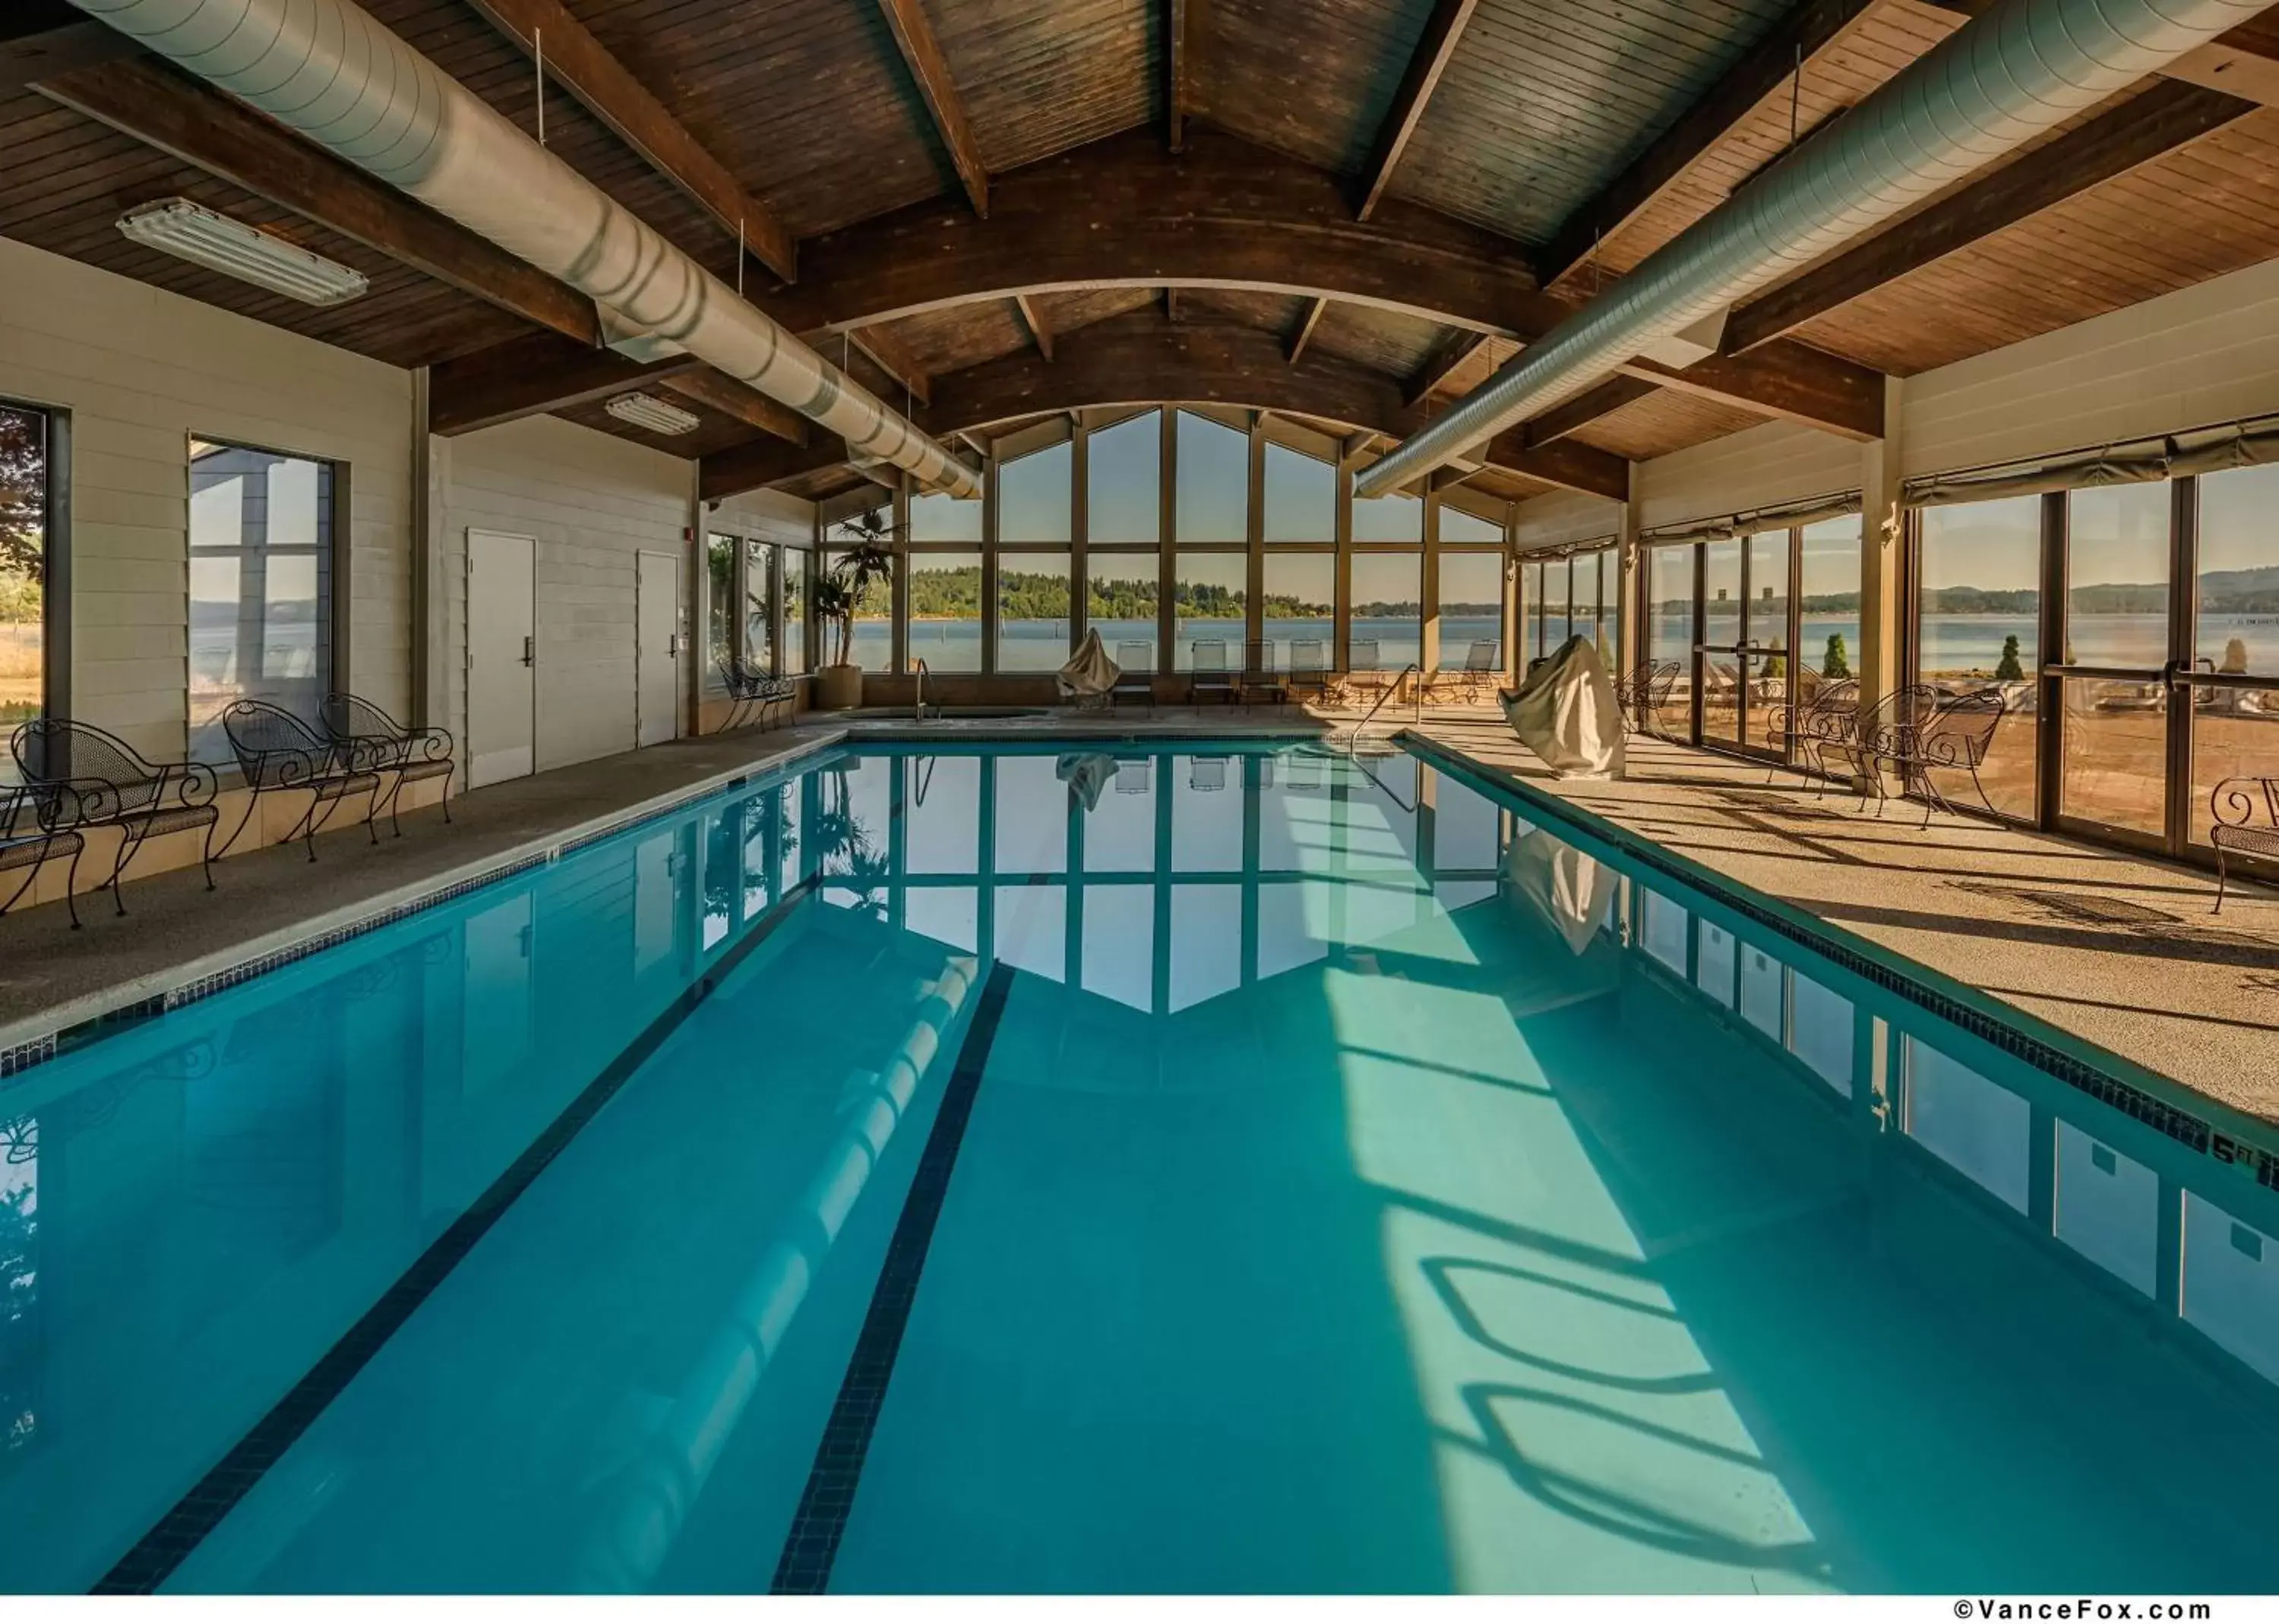 On site, Swimming Pool in Best Western Plus Silverdale Beach Hotel